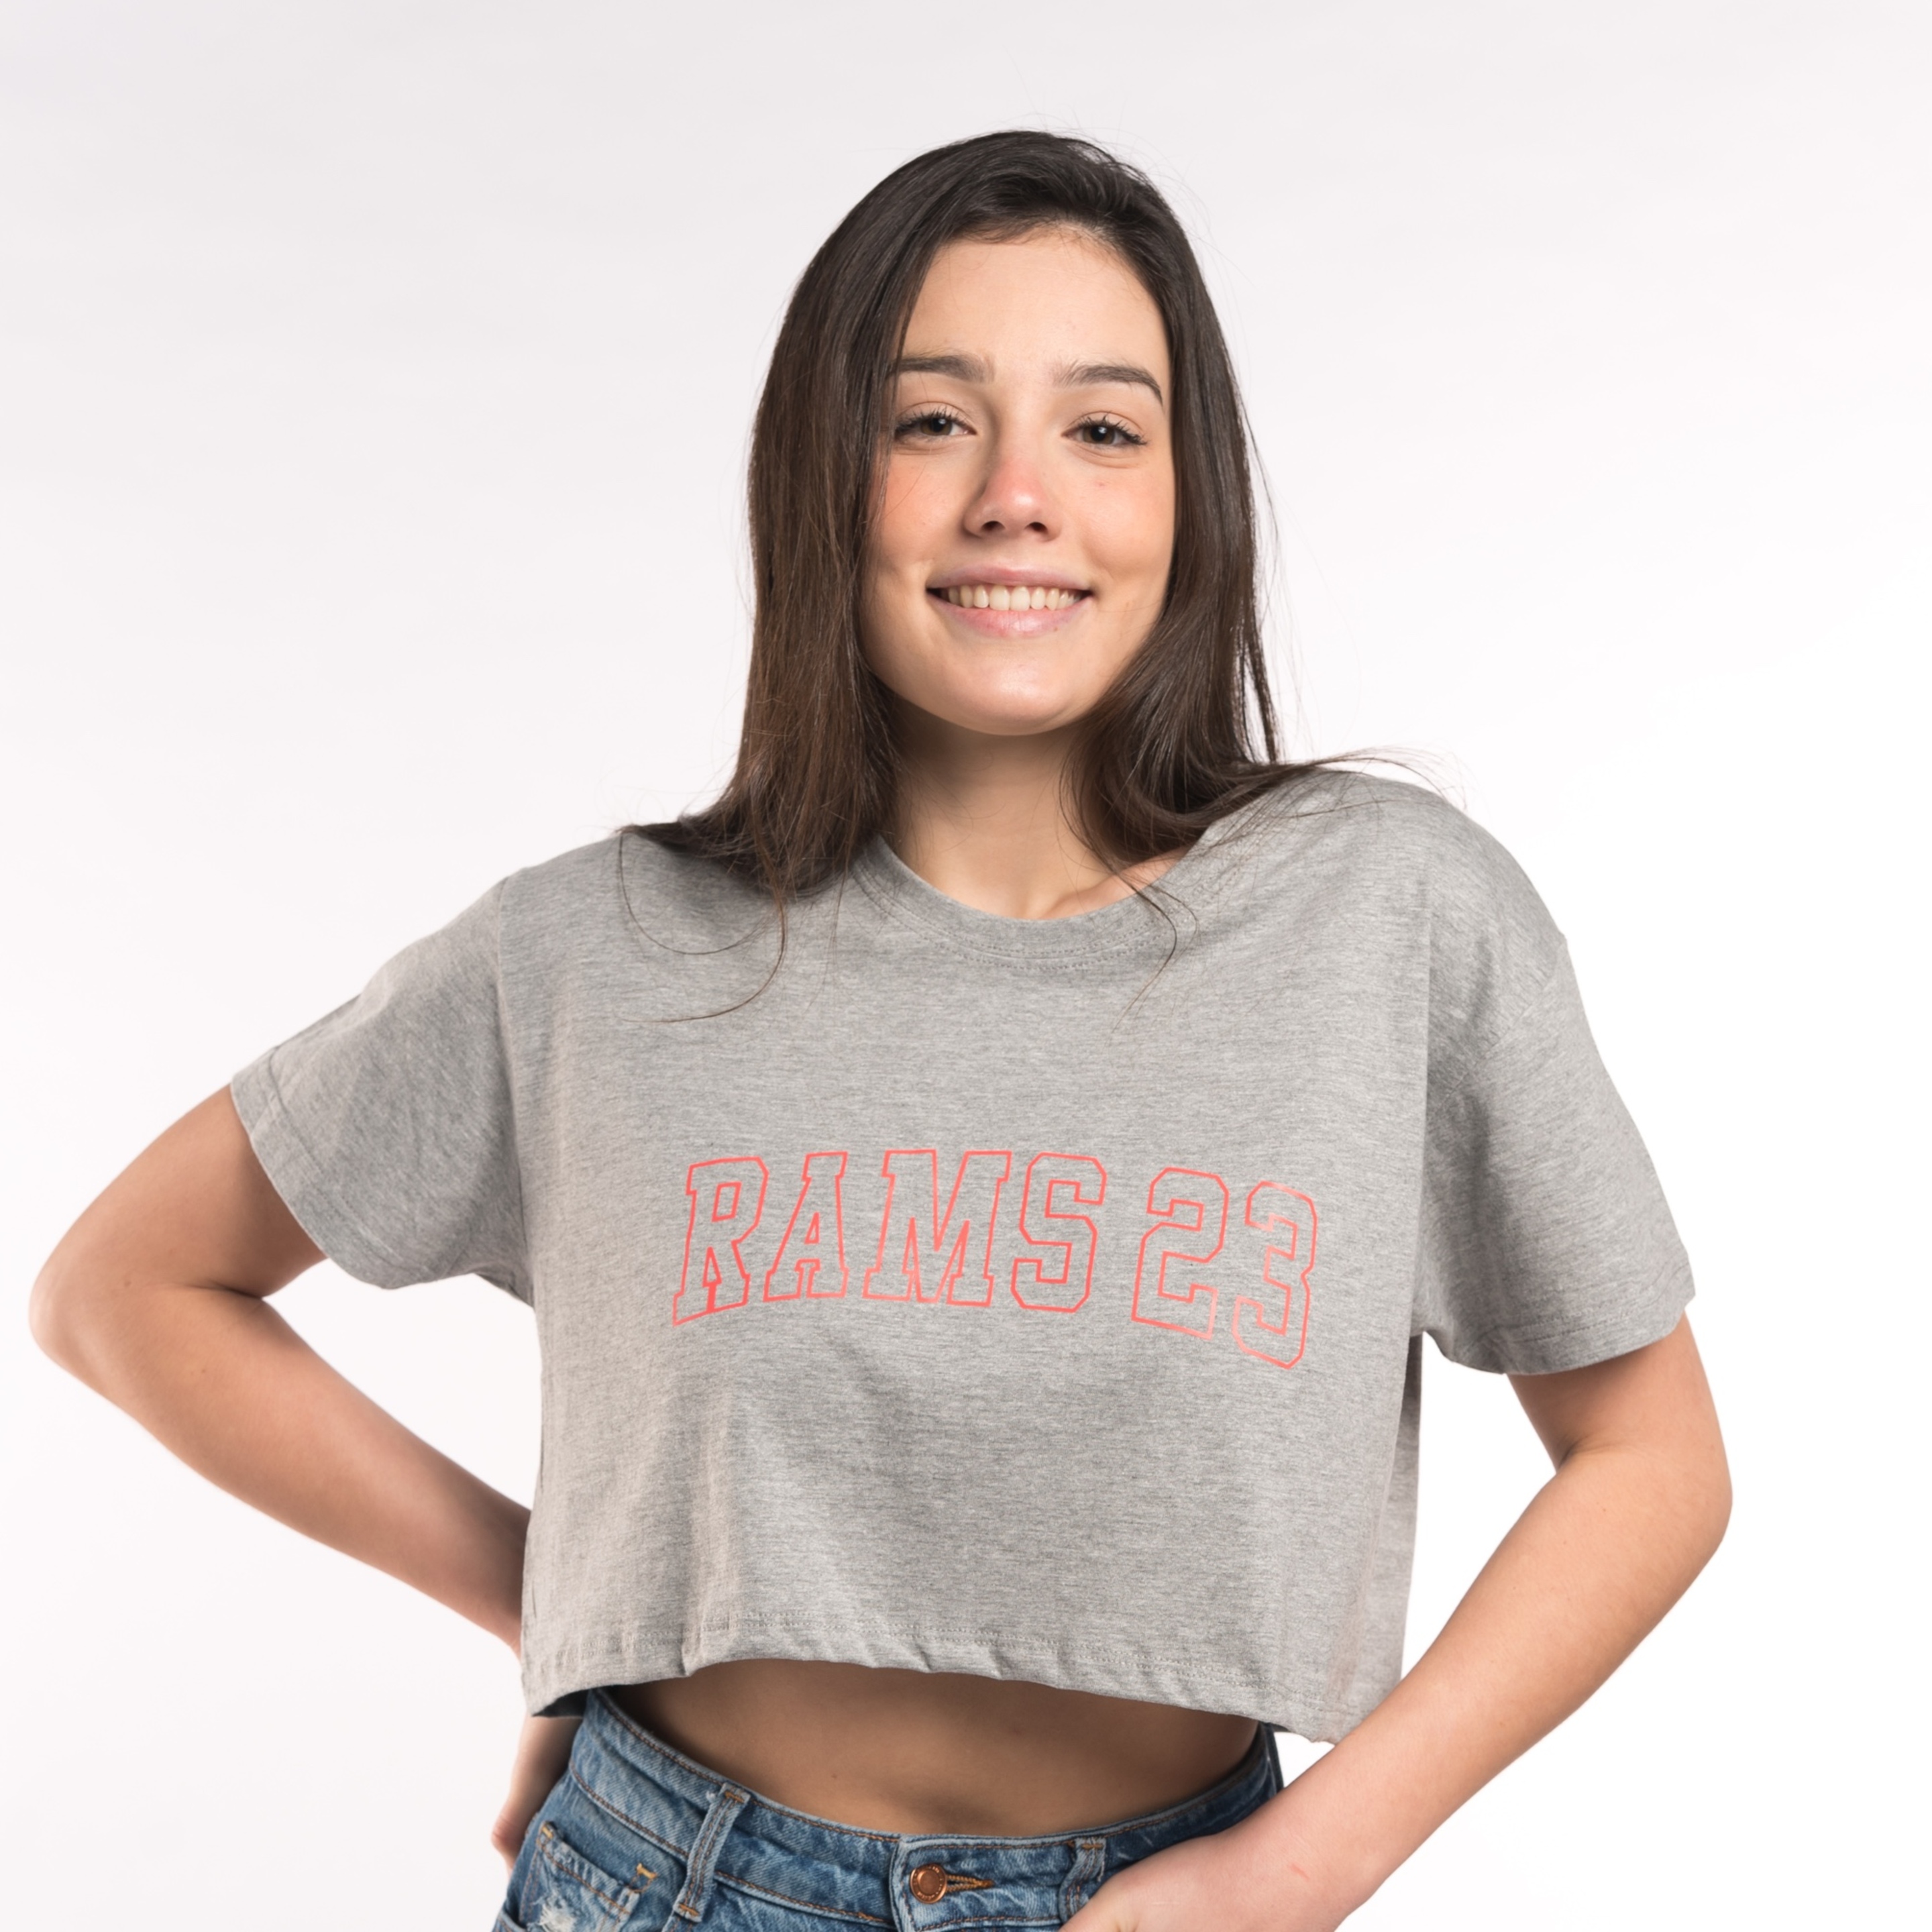 Camiseta Rams 23 Silhouette